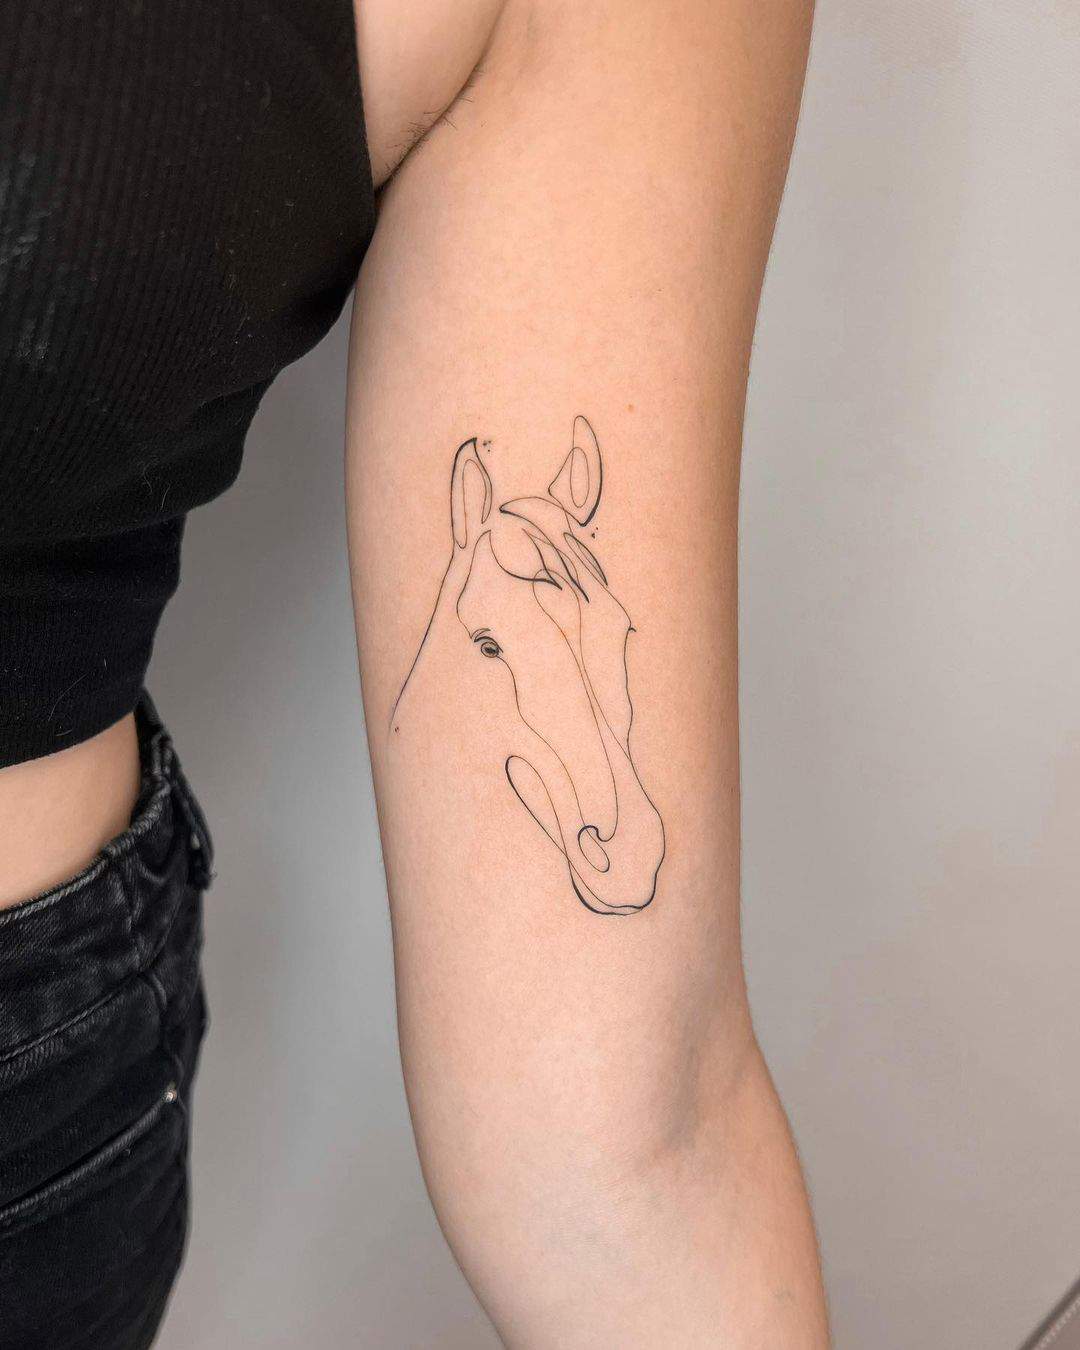 Un caballo en trazo fino tatuado en el brazo